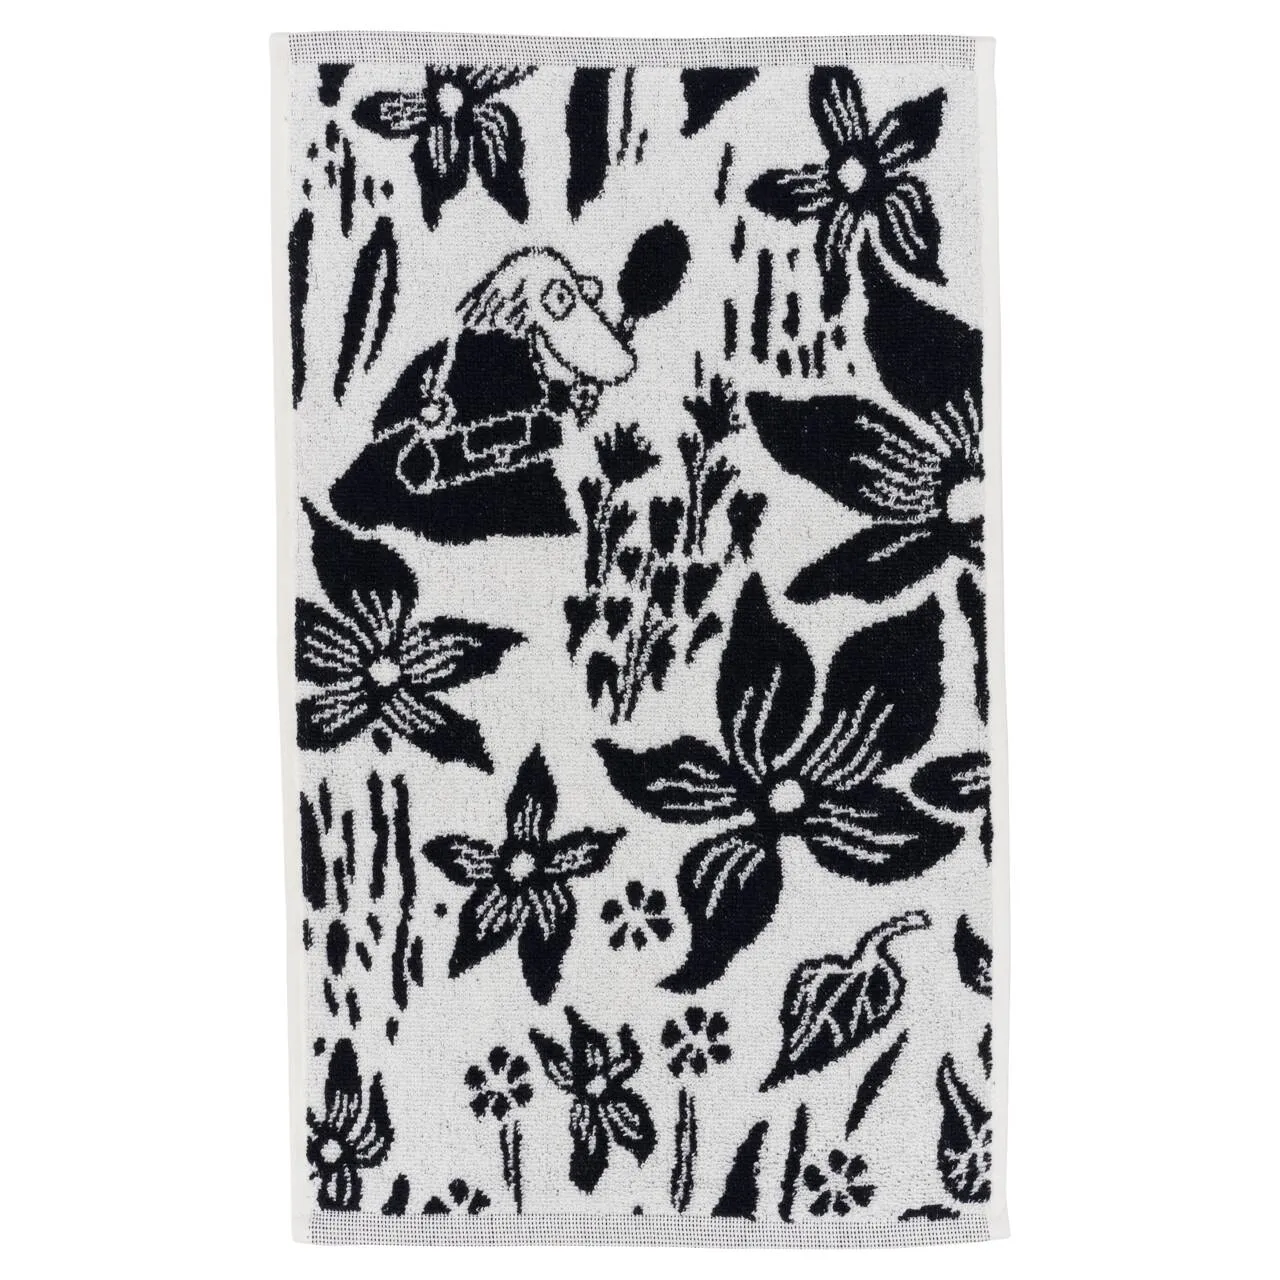 1070909_Moomin_moomin-hand-towel-30x50cm-lilja-black&white_01.jpg